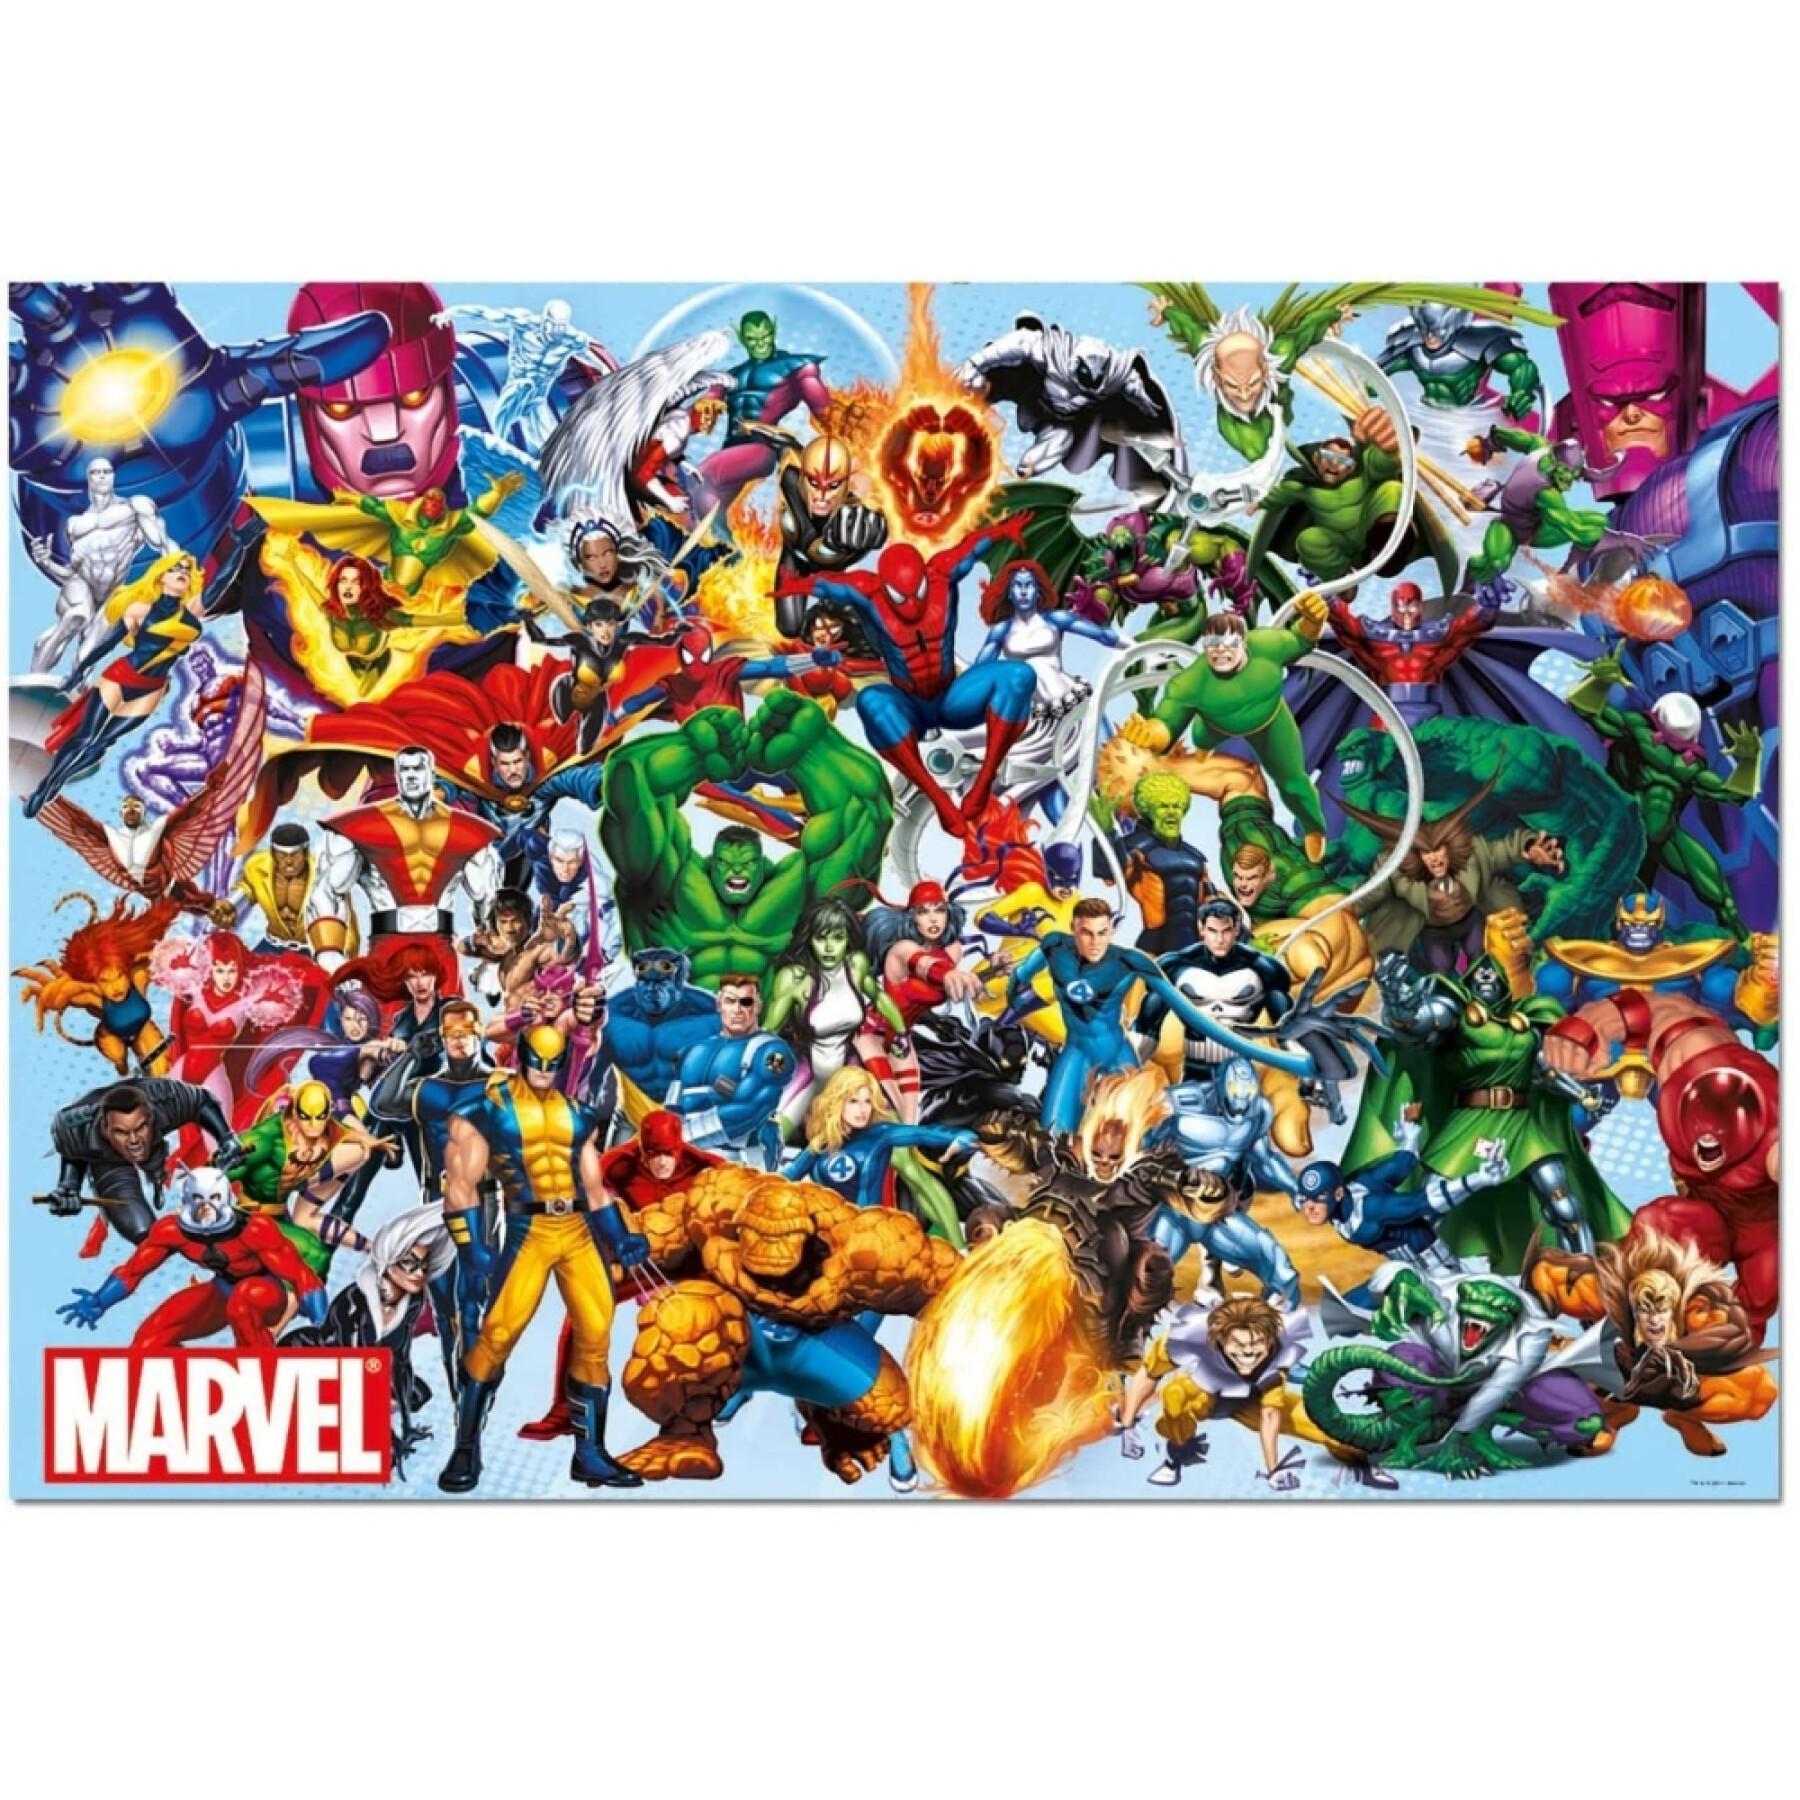 Puzzle mit 1000 Teilen Avengers Marvel Heroes